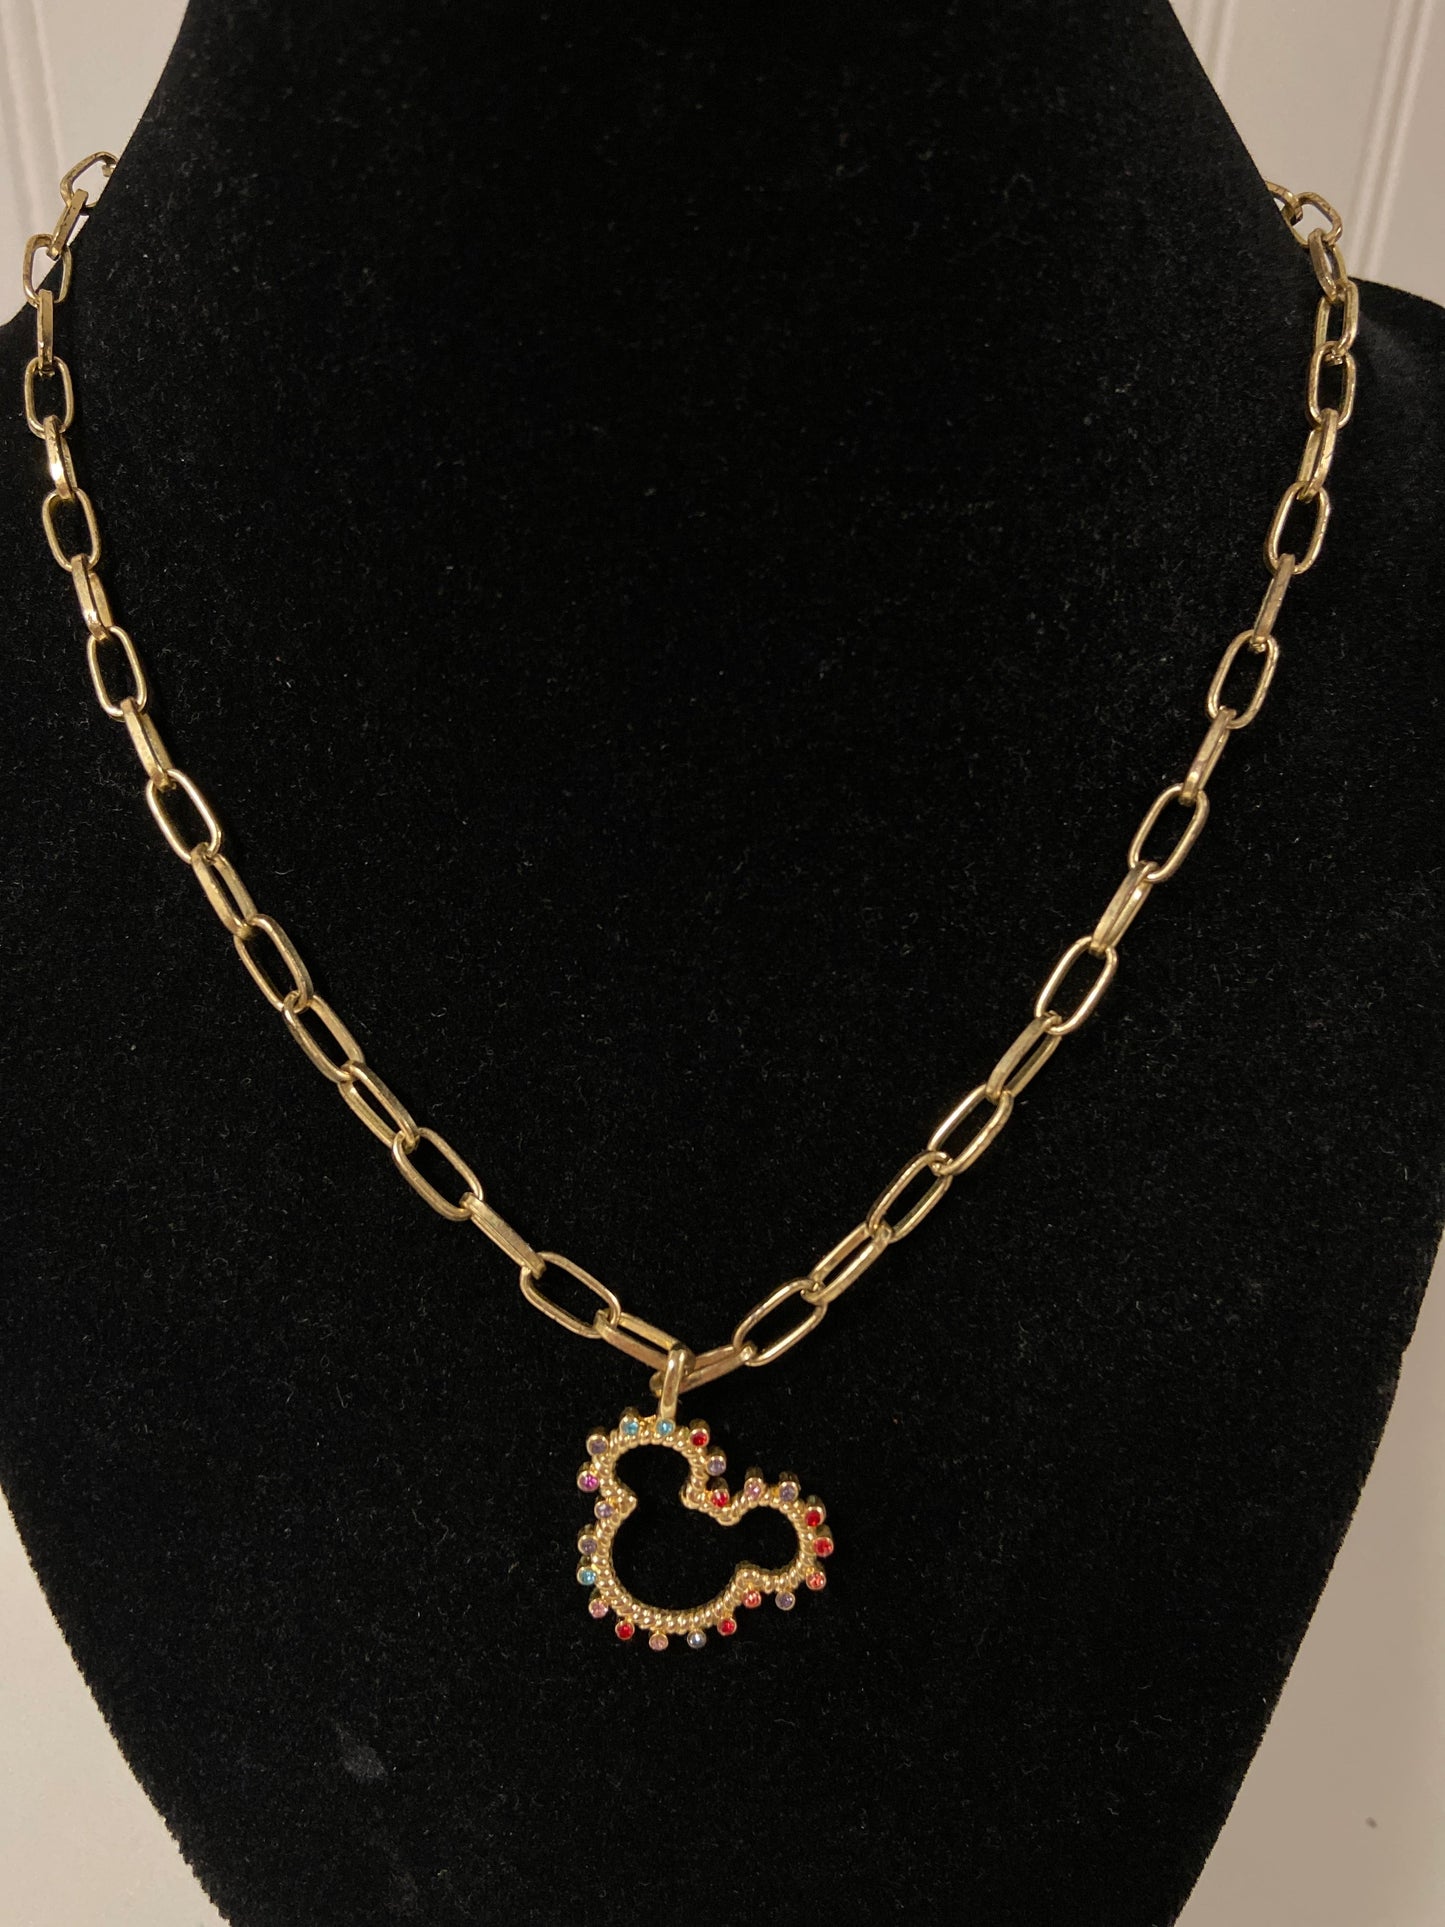 Necklace Charm Baublebar, Size 1